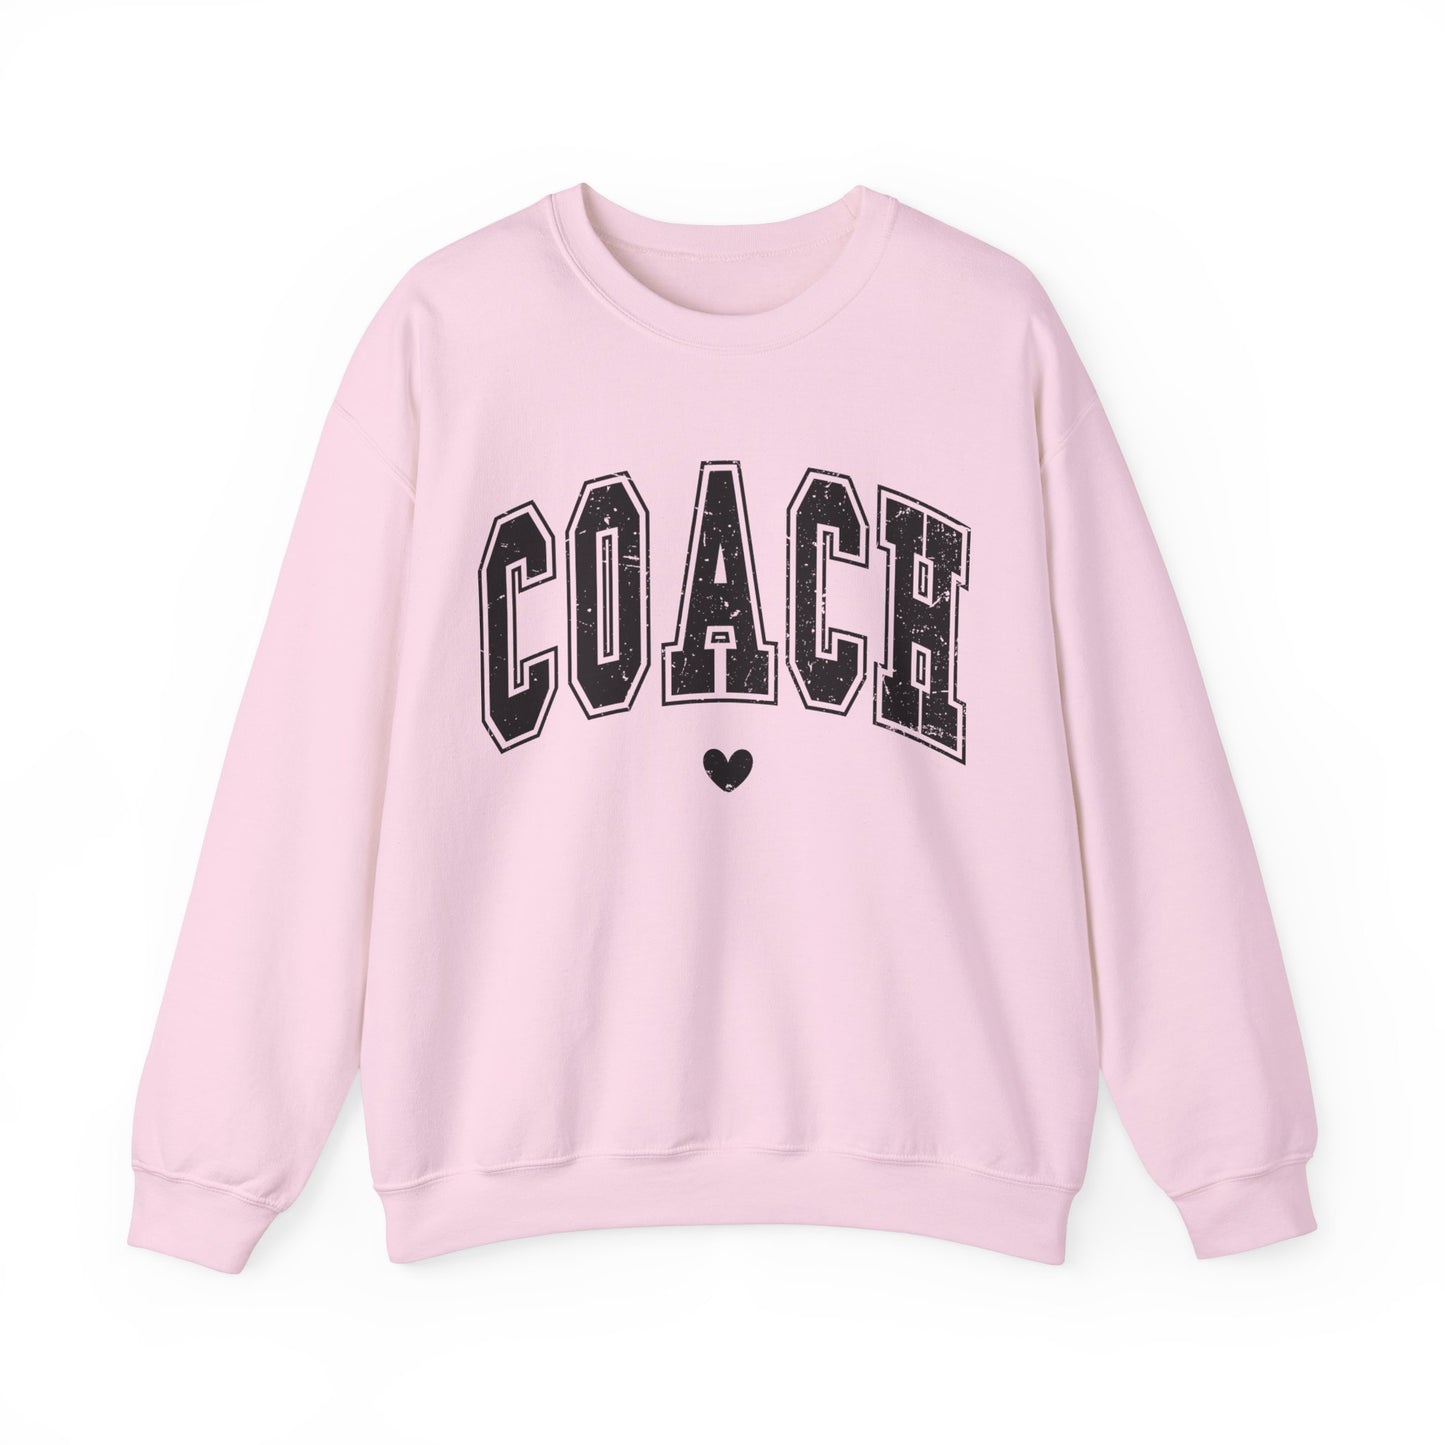 Sports Coach Women's Crewneck Sweatshirt